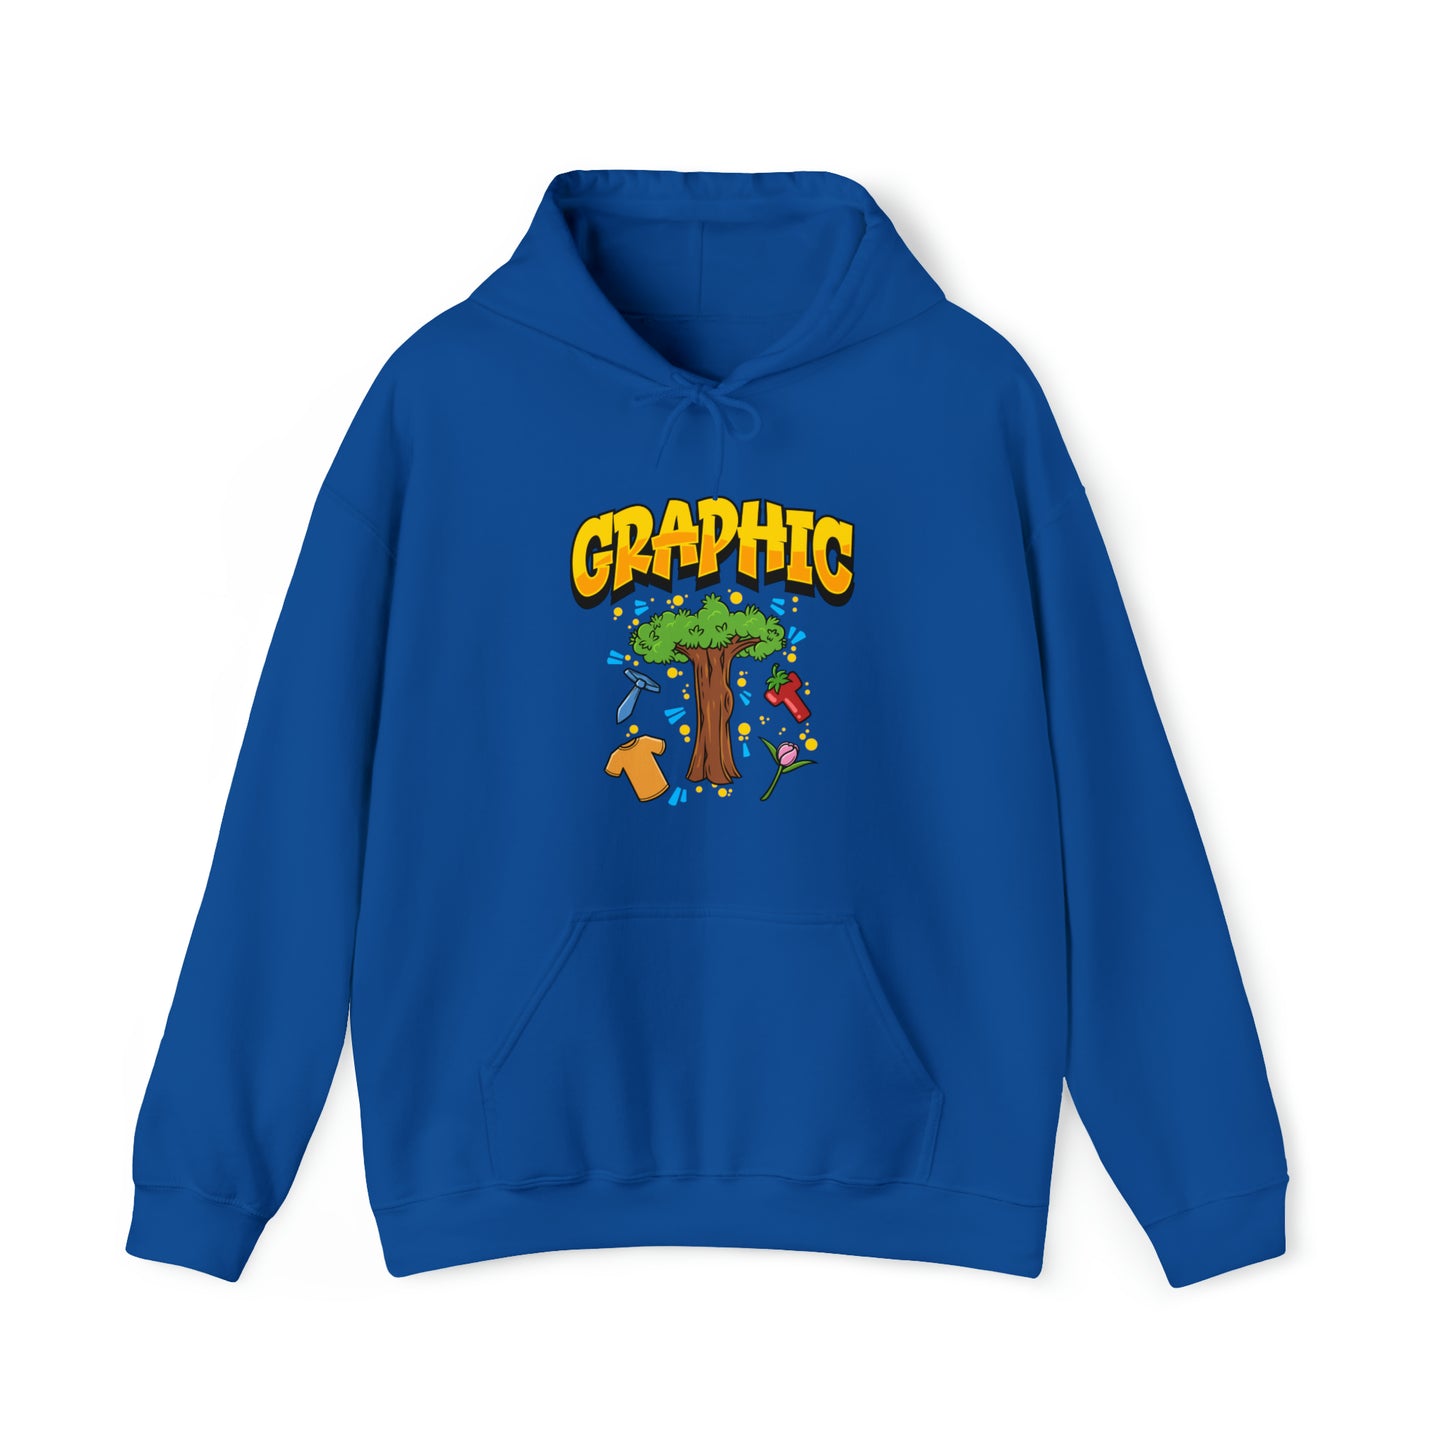 Custom Parody Hooded Sweatshirt, Graphic T's design